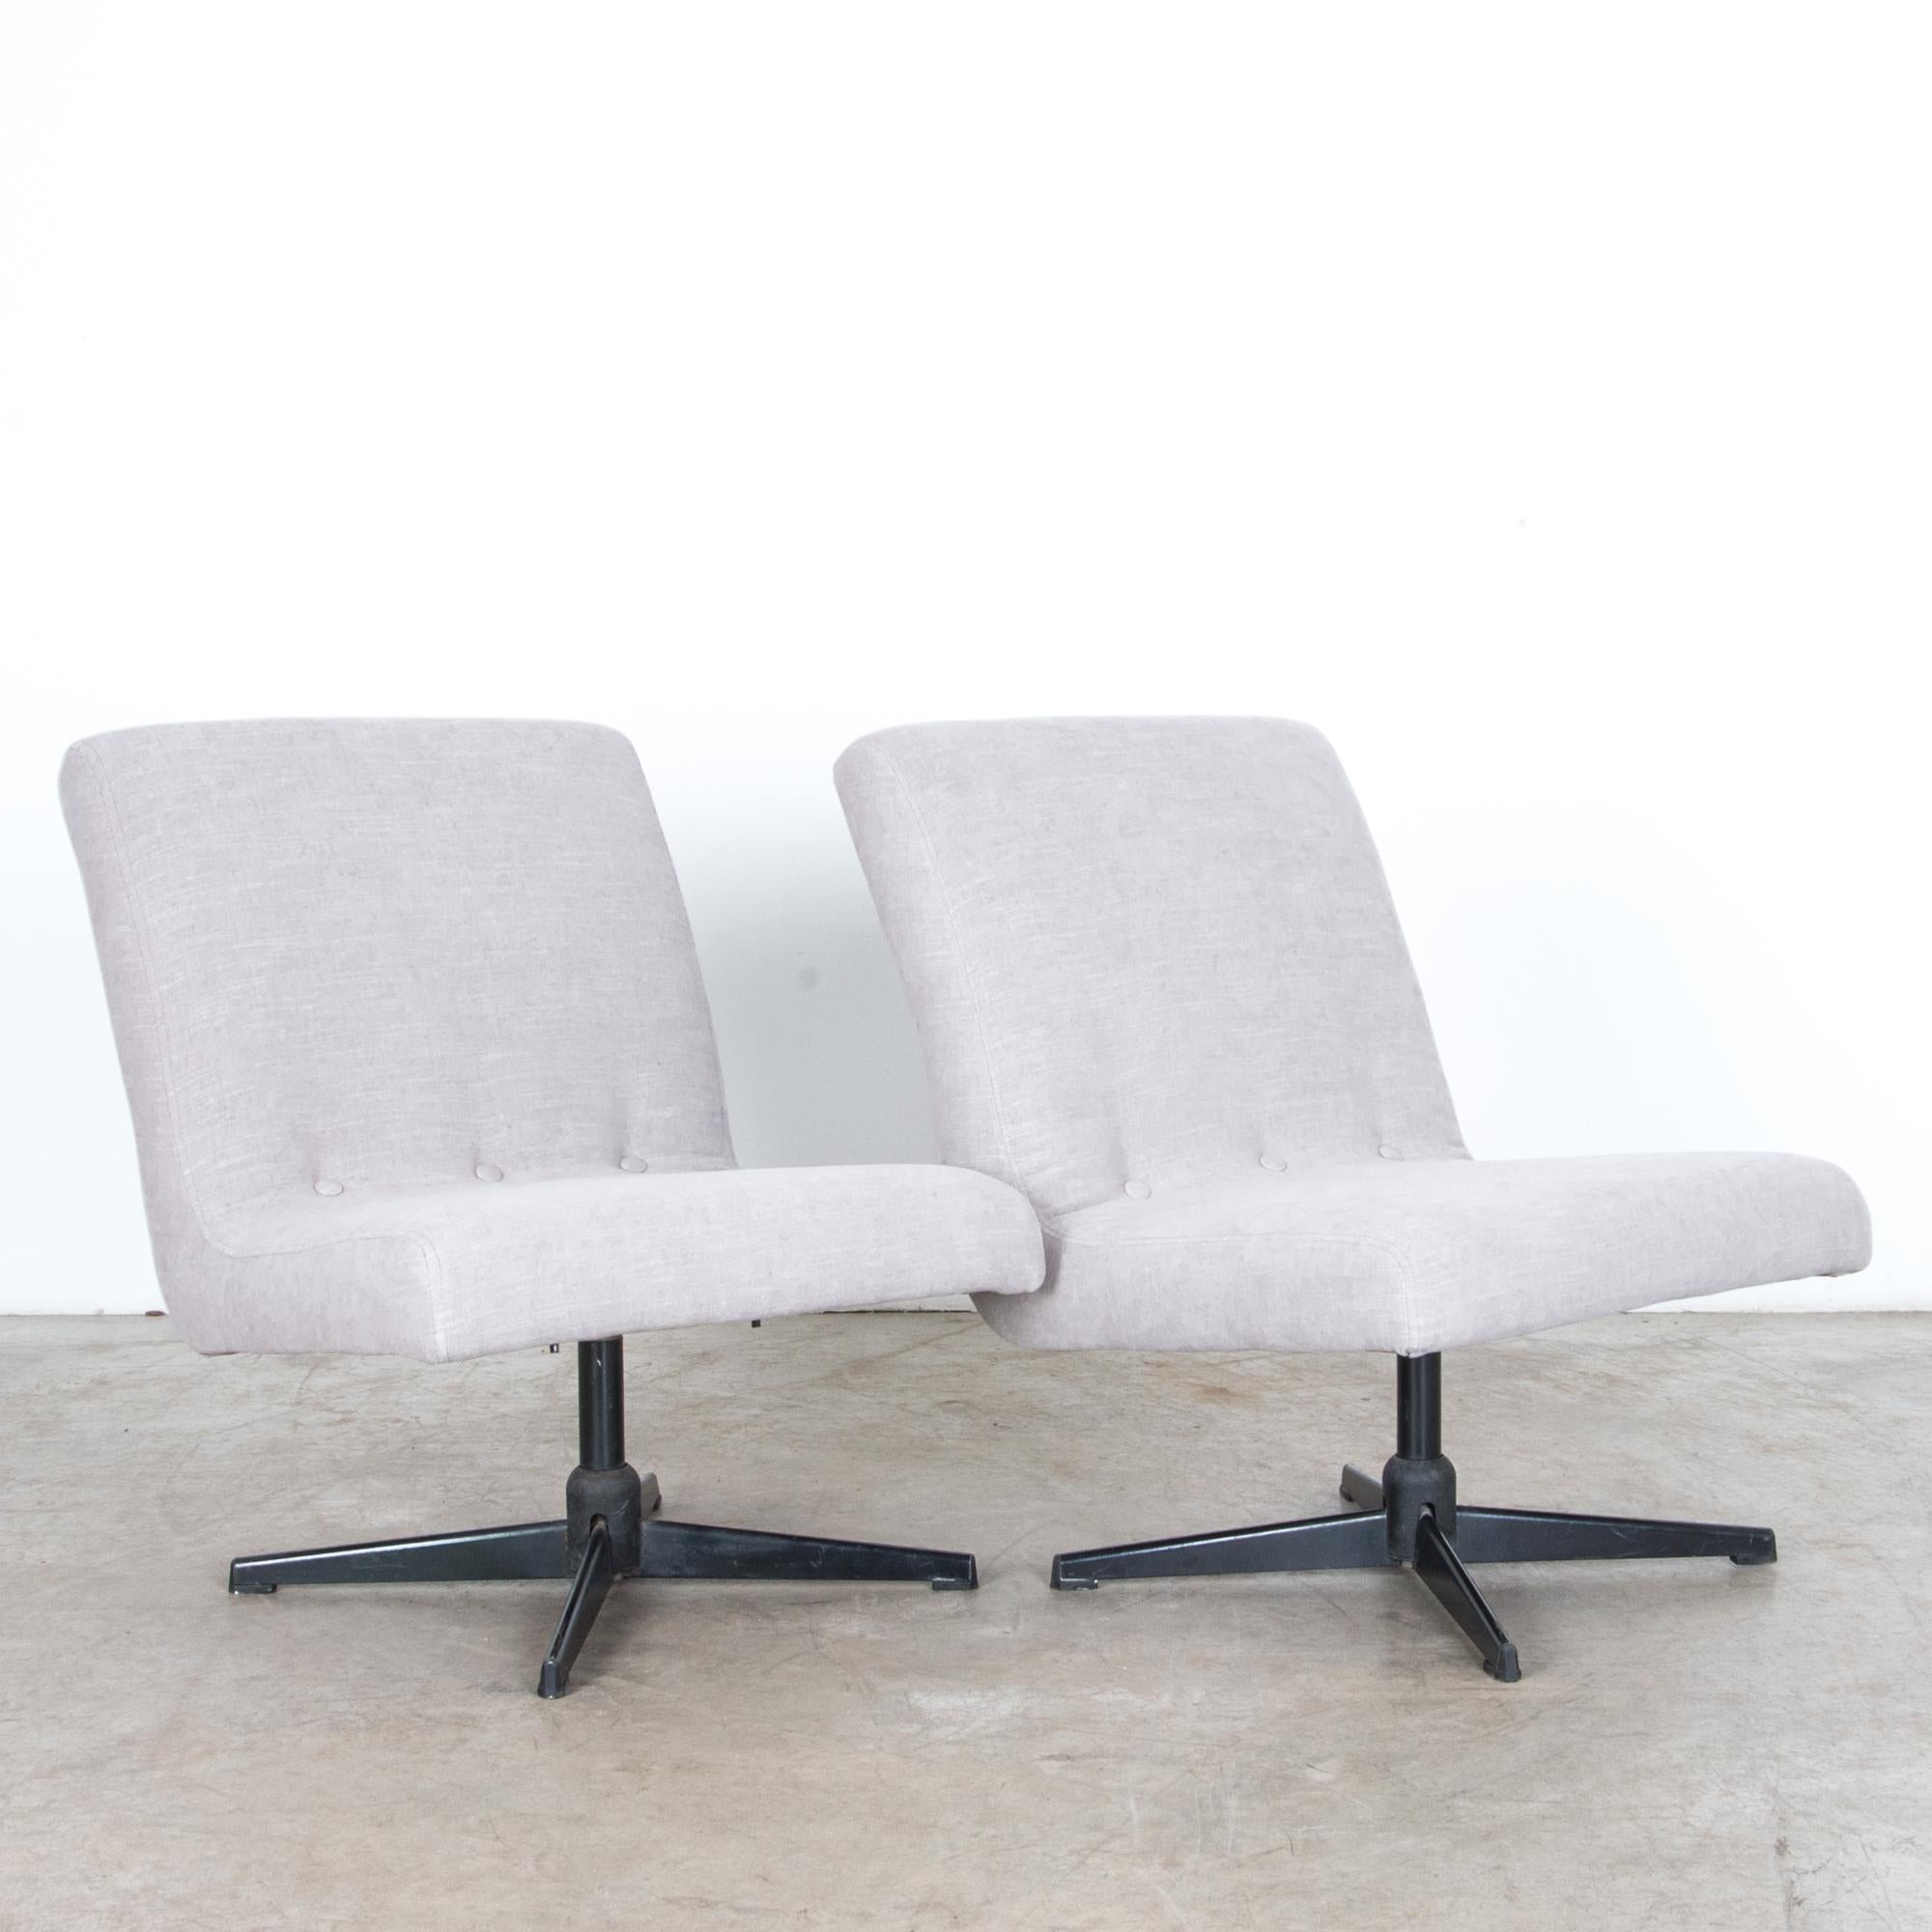 Czech 1960s Mid-Century Modern Swivel Chairs, a Pair